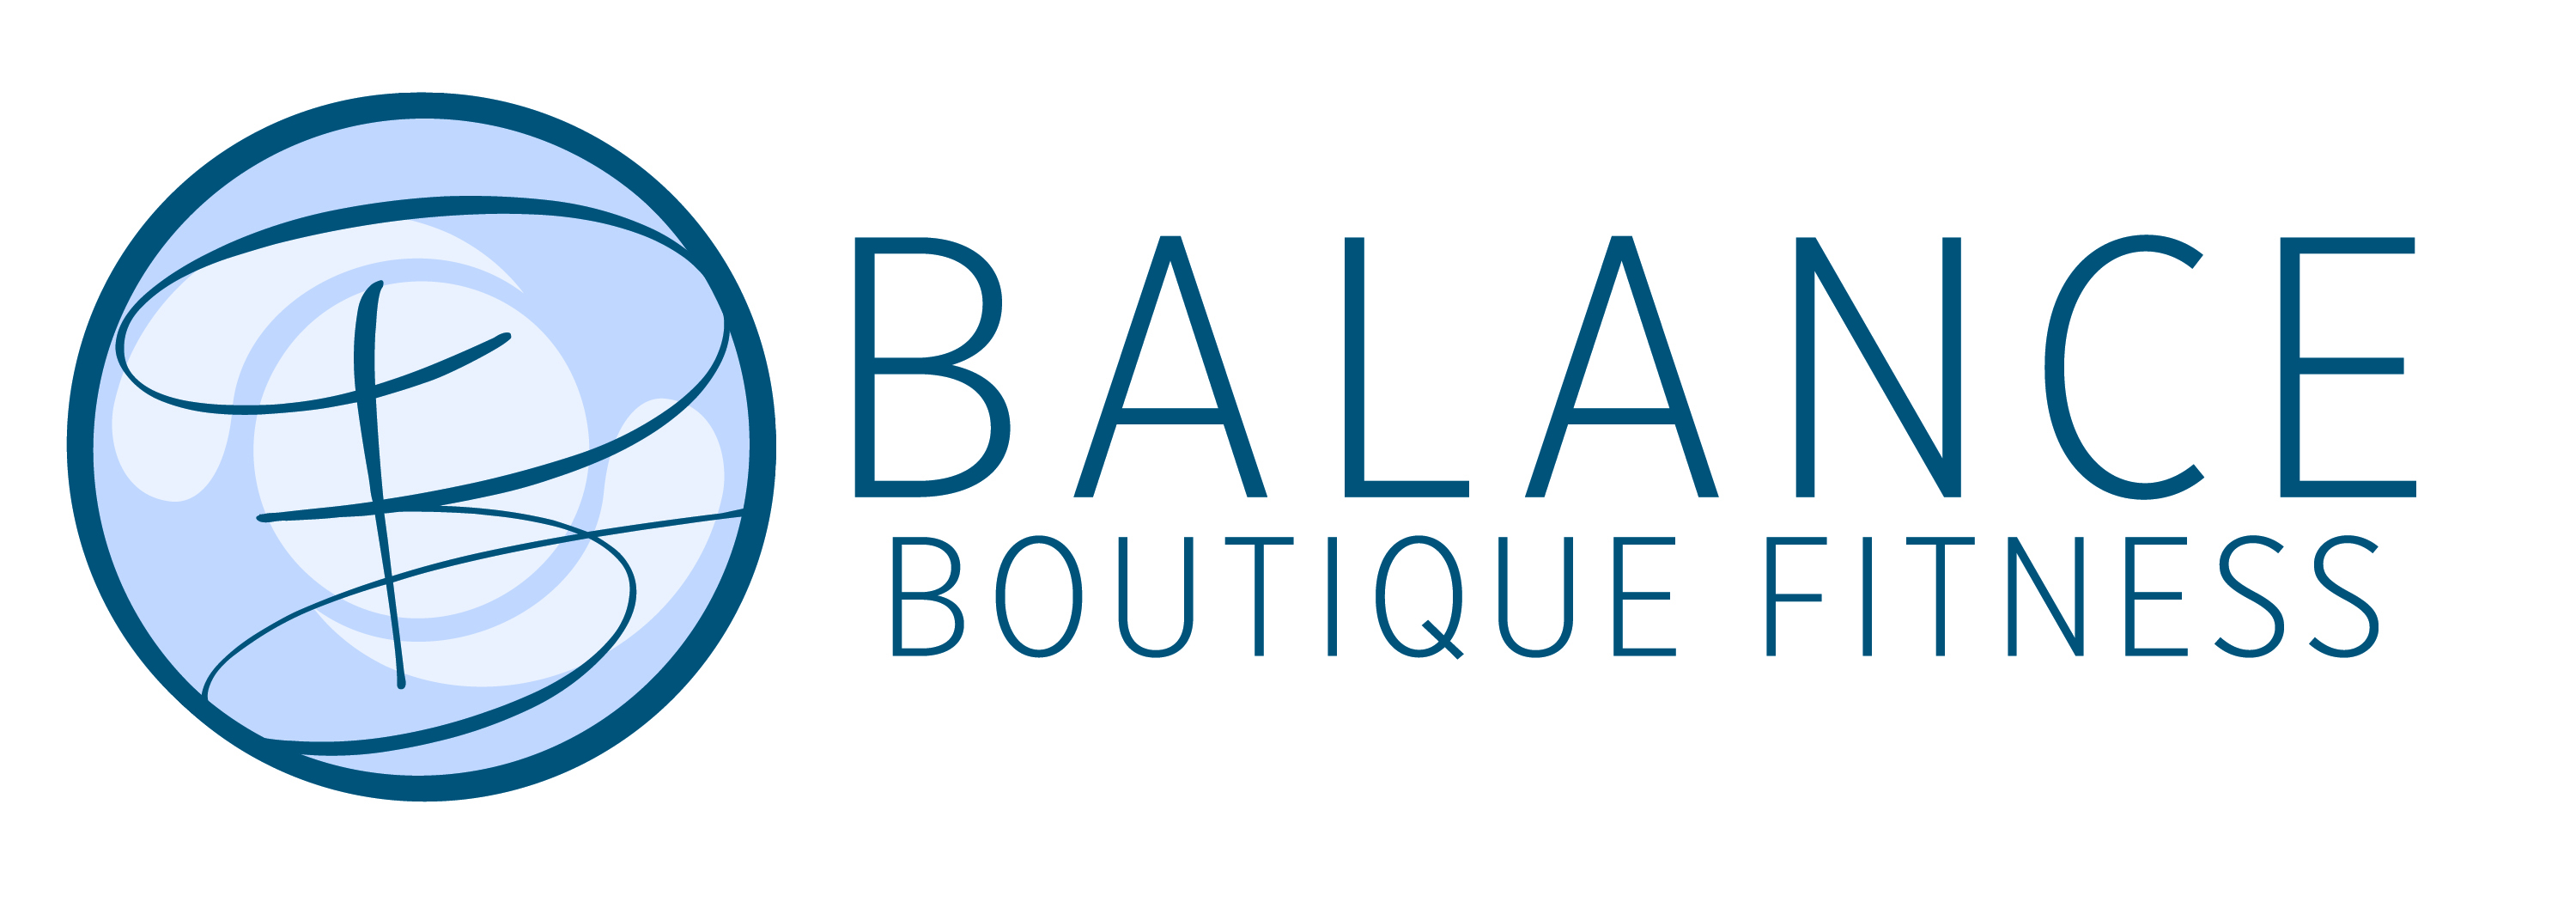 BalanceBoutiqueFitness-Logo.jpg